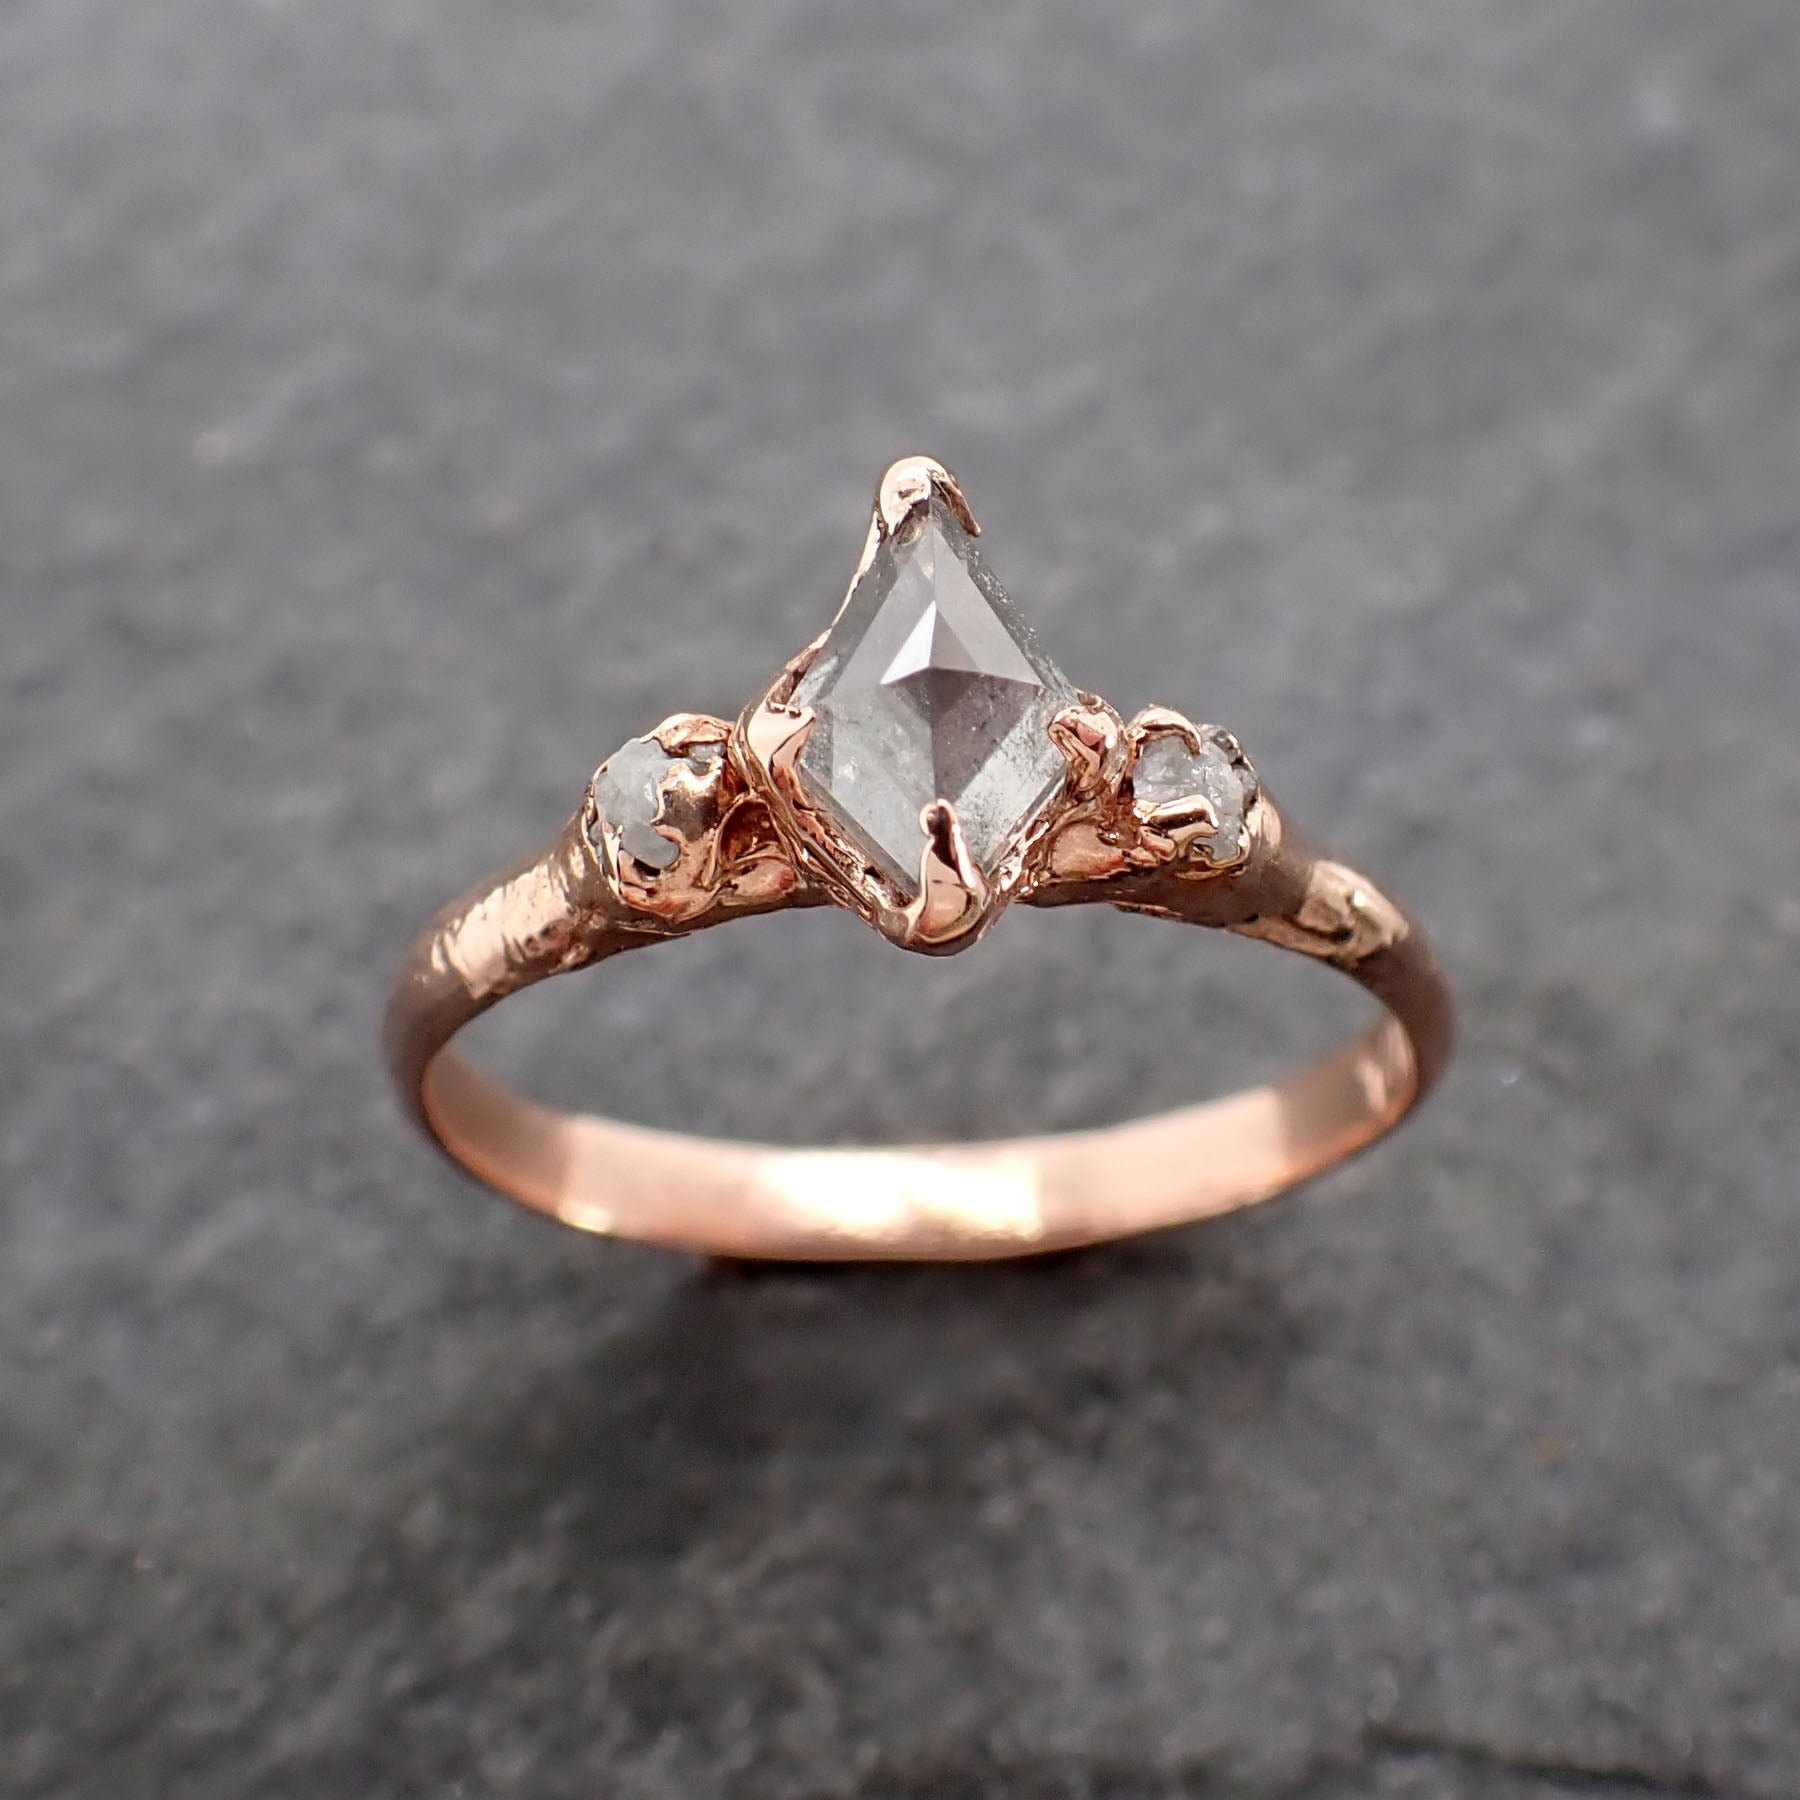 fancy cut dainty white diamond engagement 14k rose gold multi stone wedding ring stacking rough diamond ring byangeline 2566 Alternative Engagement